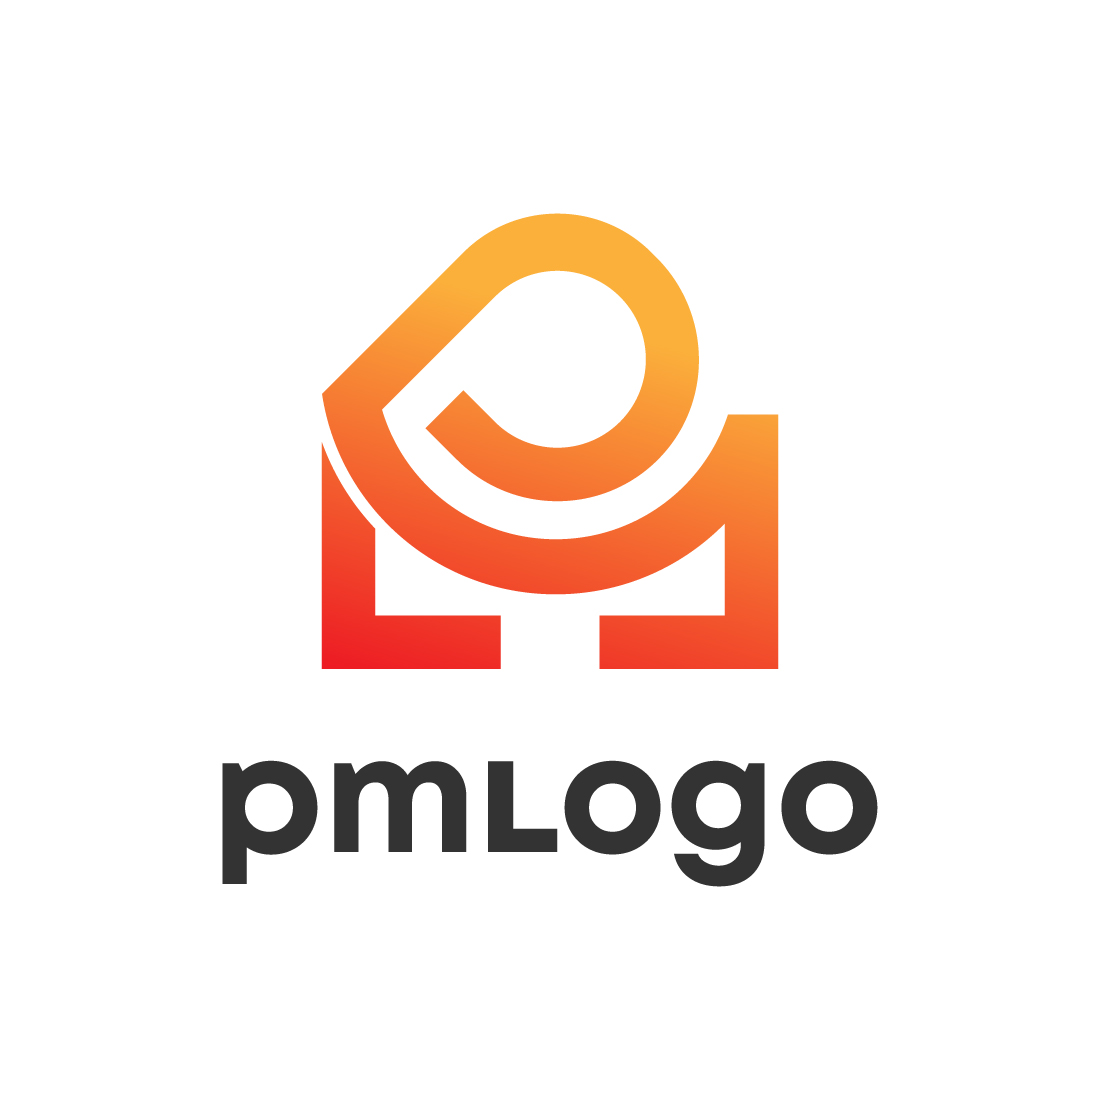 PM logo cover image.